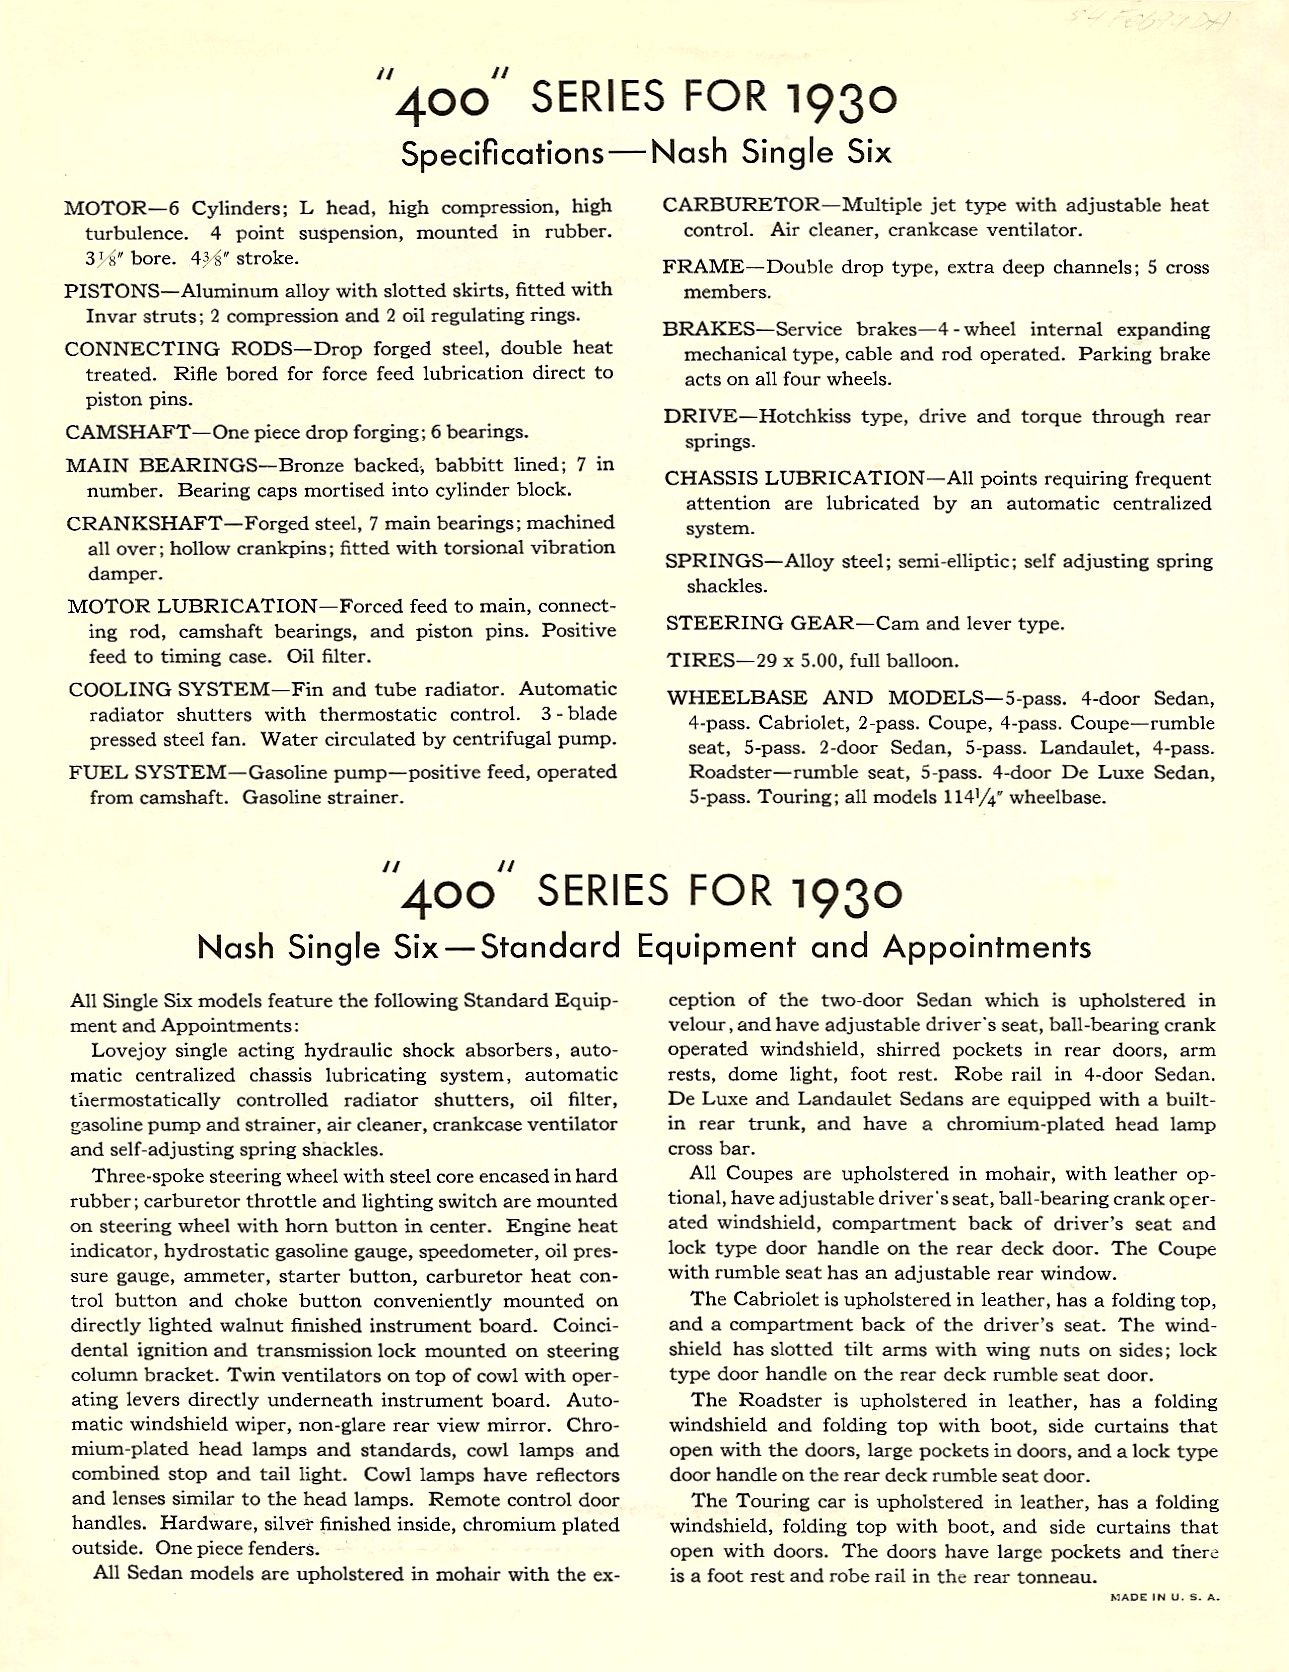 1930 Nash 400 Single Six Sedans Folder Page 2